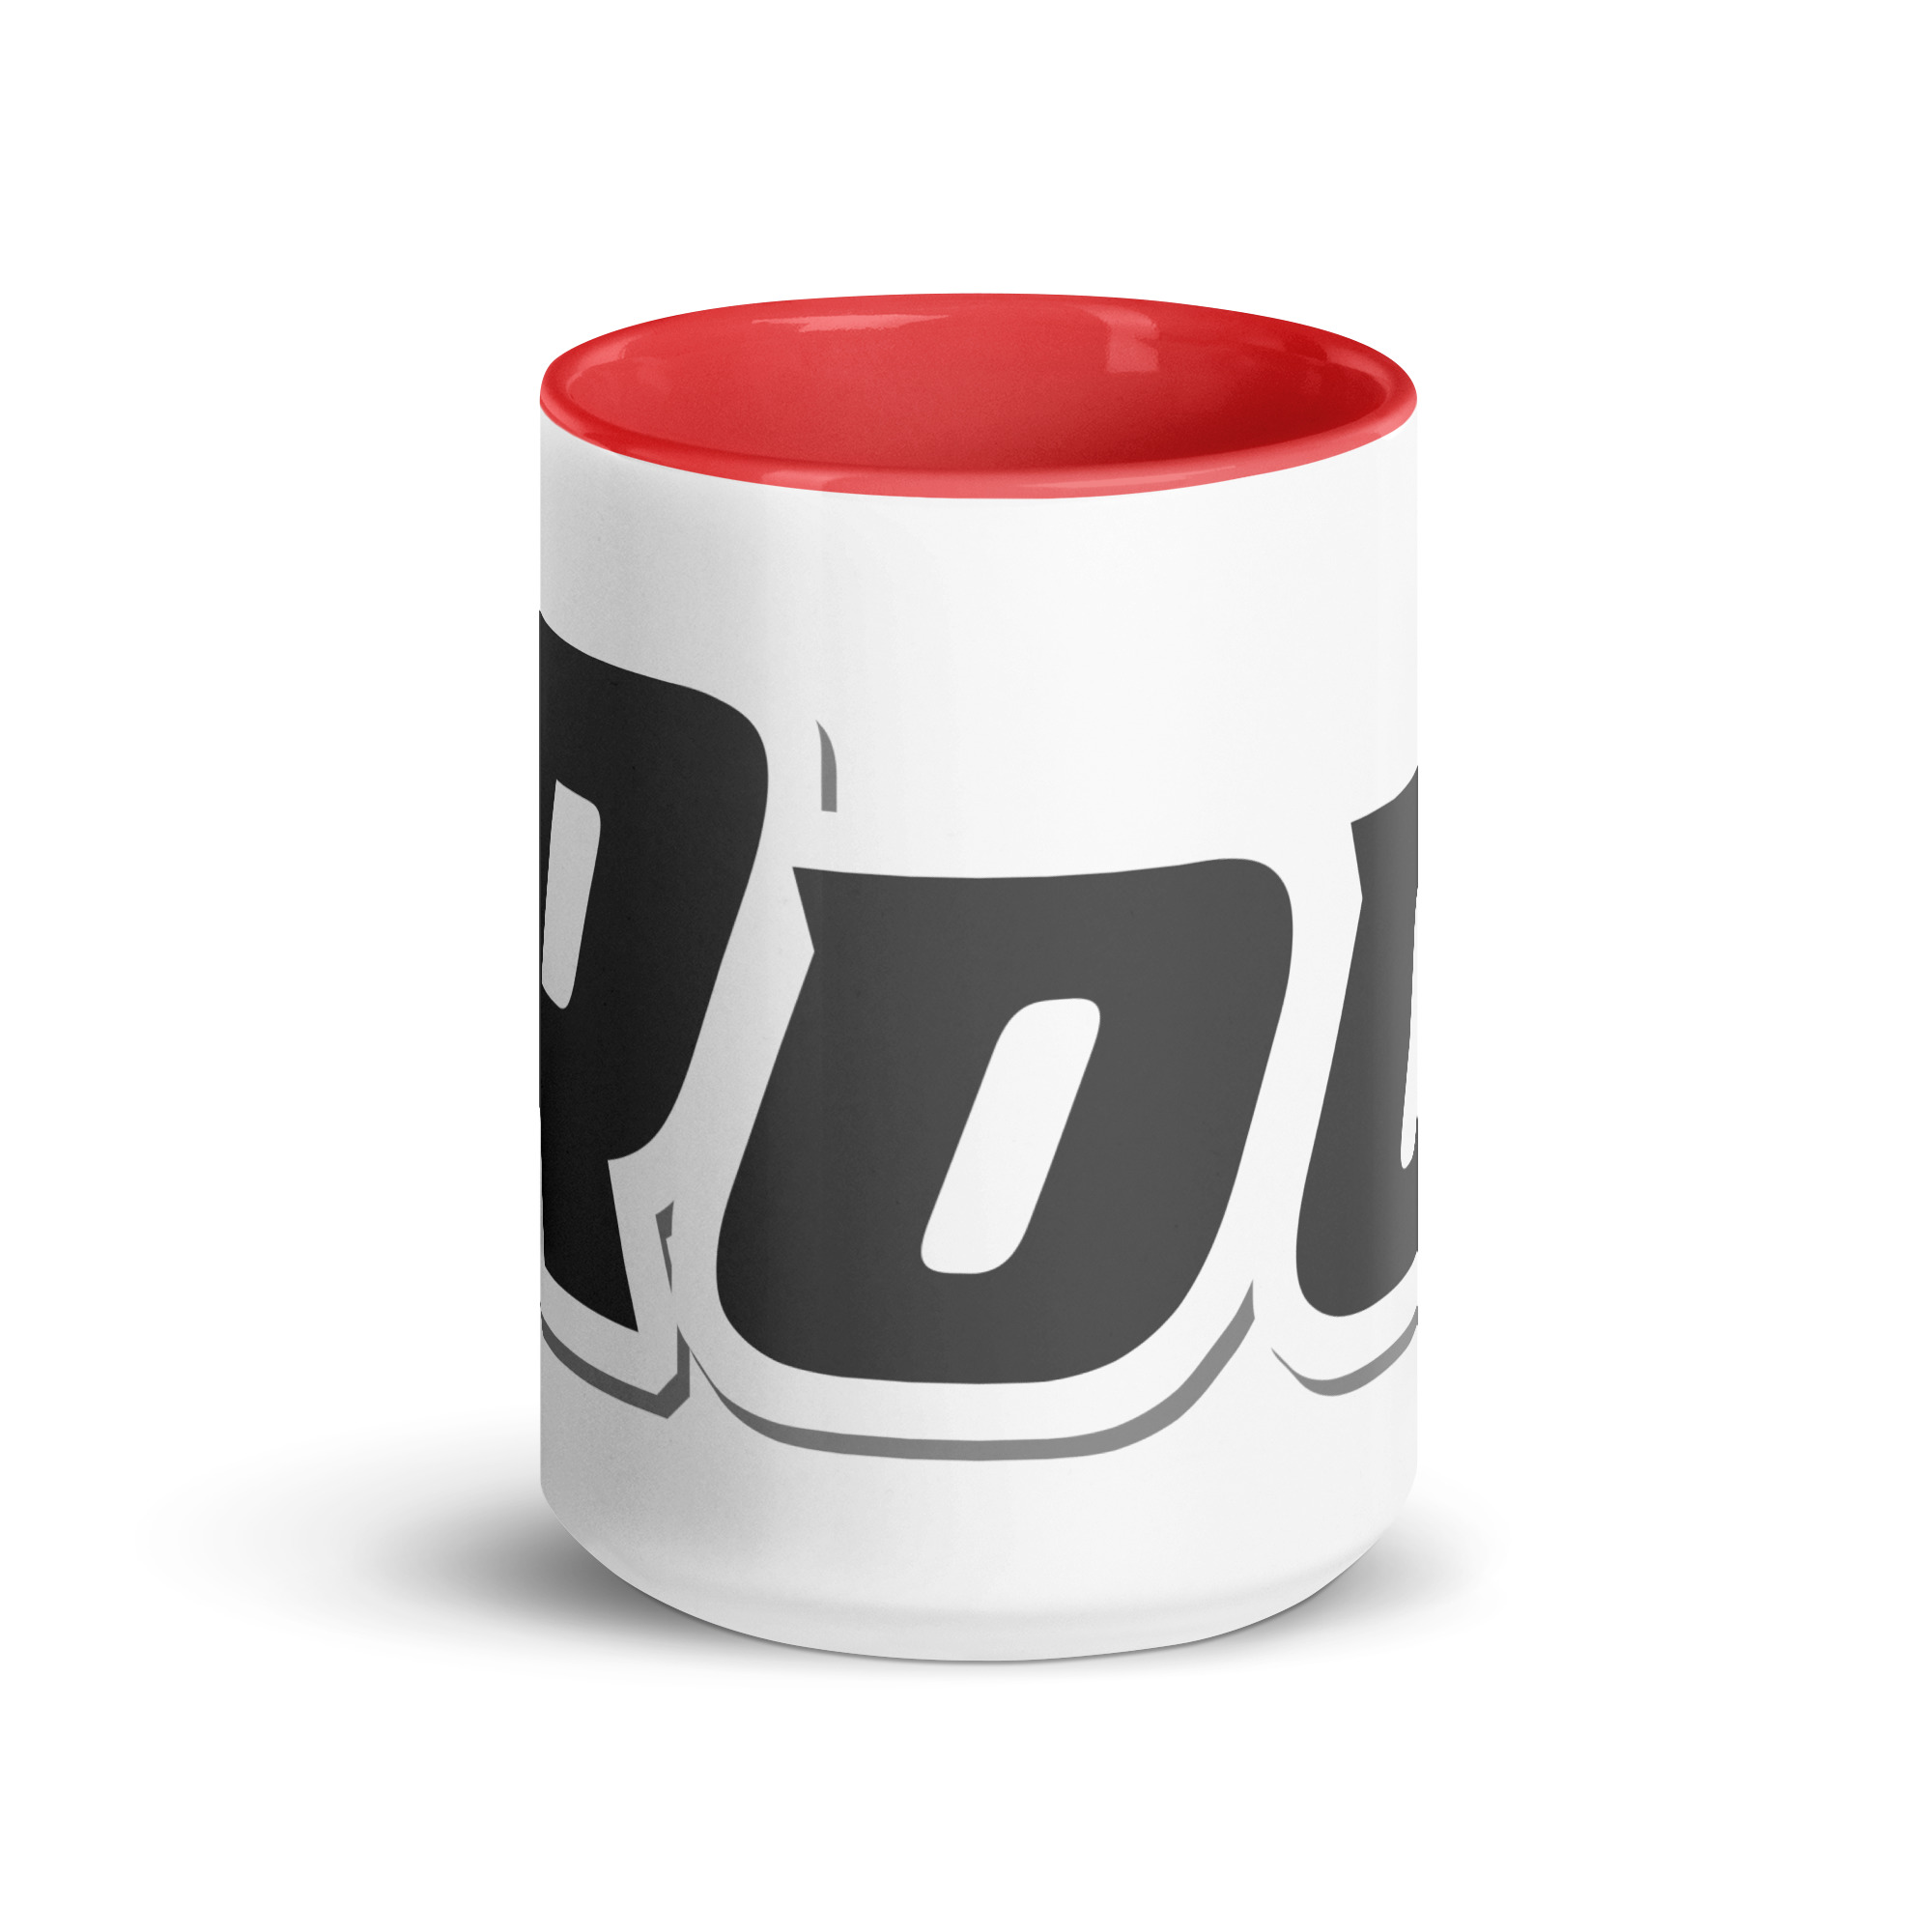 white-ceramic-mug-with-color-inside-red-15-oz-front-6525b50608c33.jpg